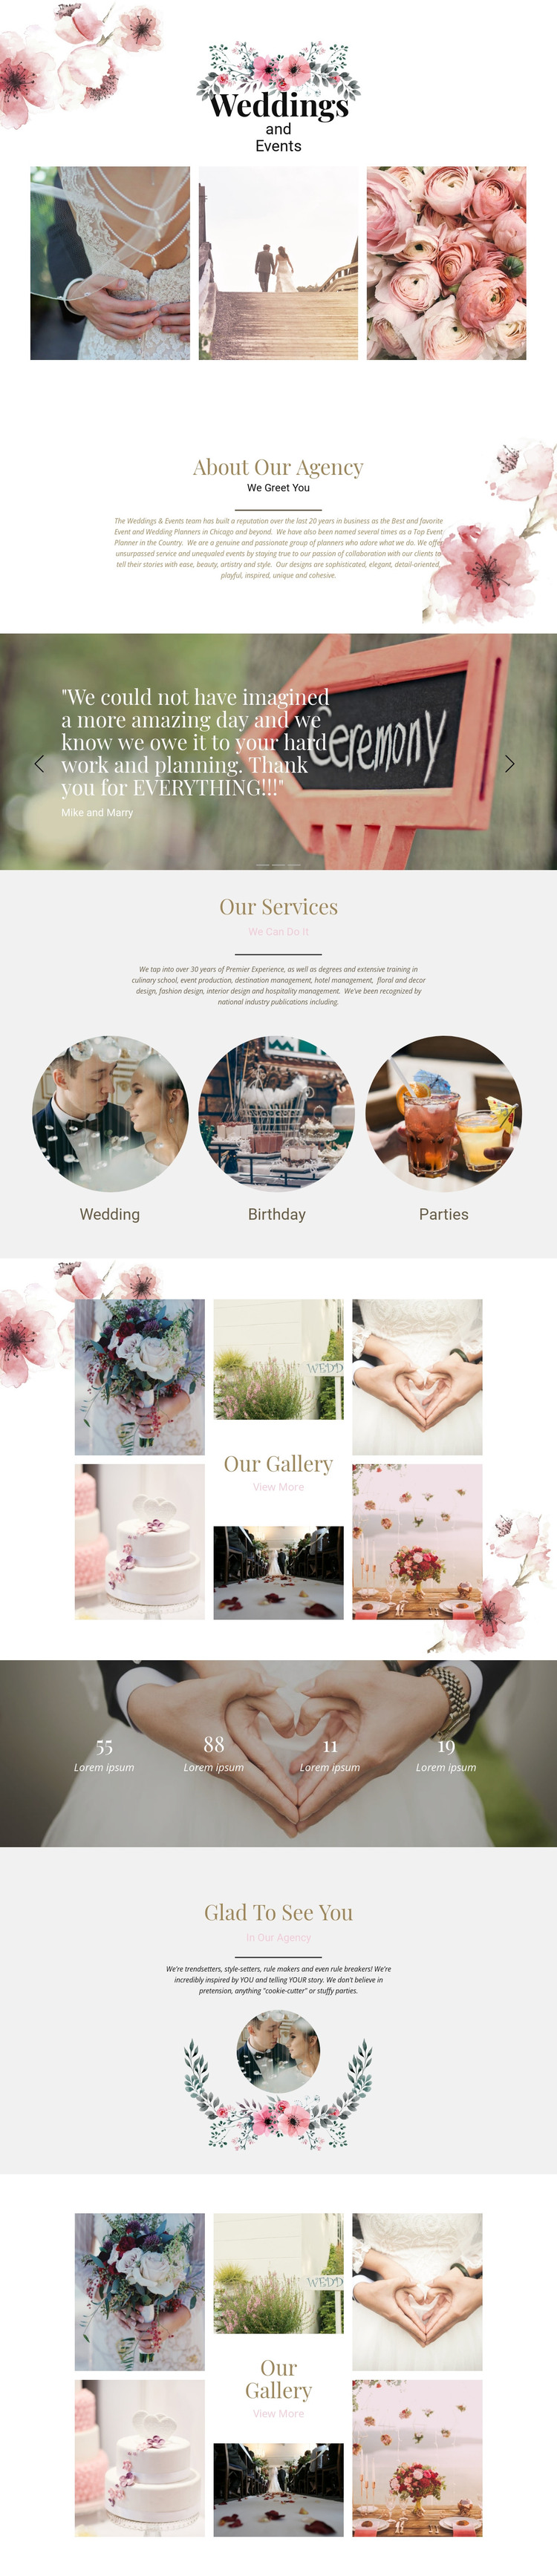 Moments of wedding Web Design